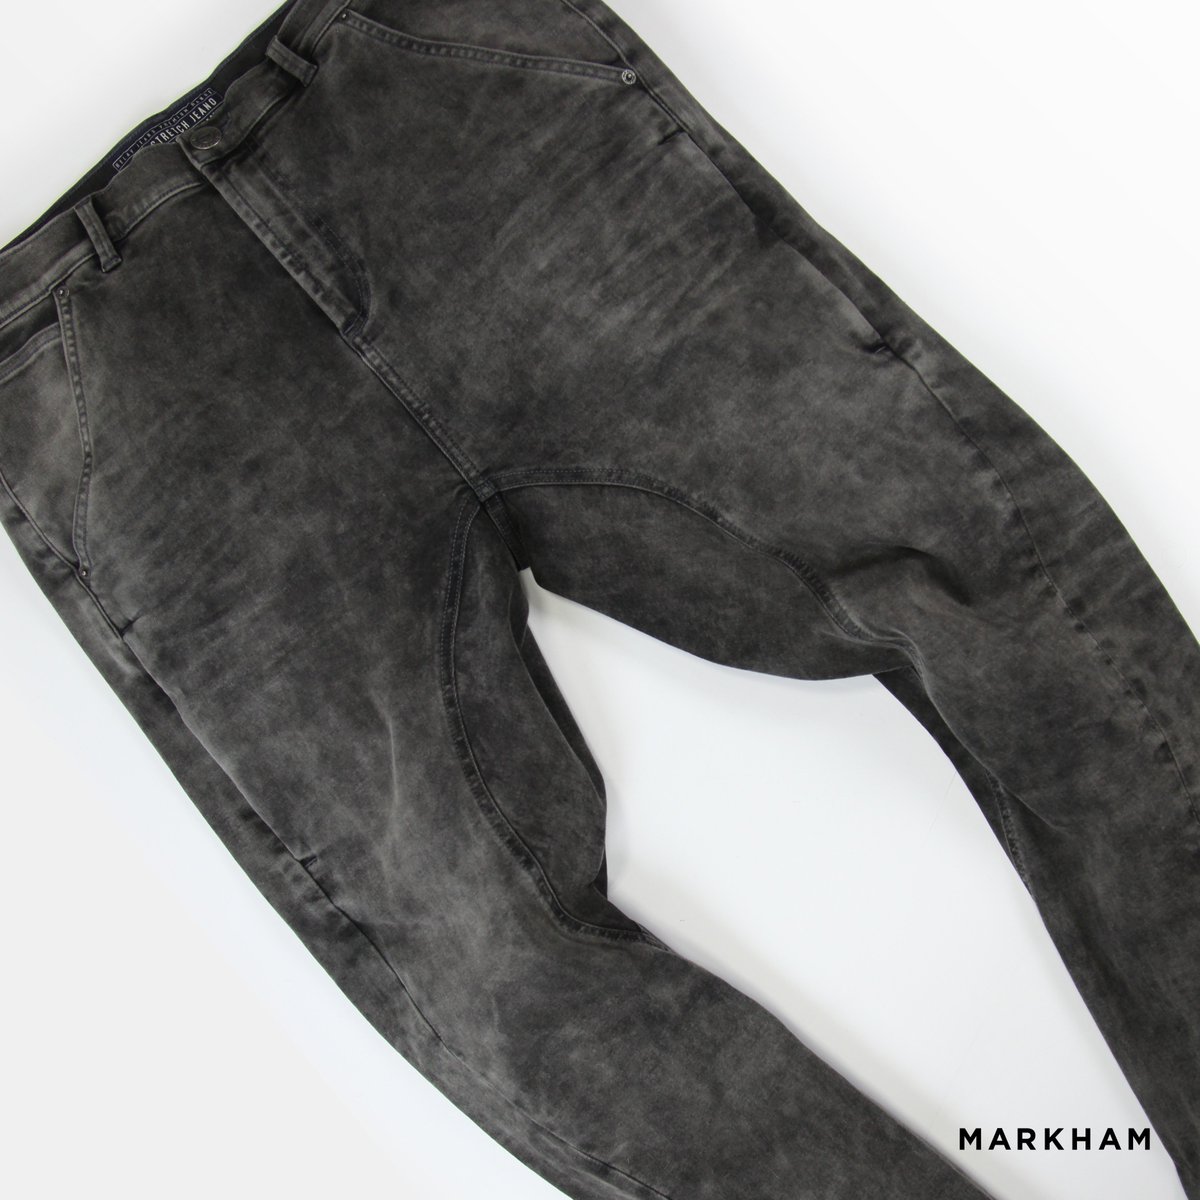 markham jeans 2018